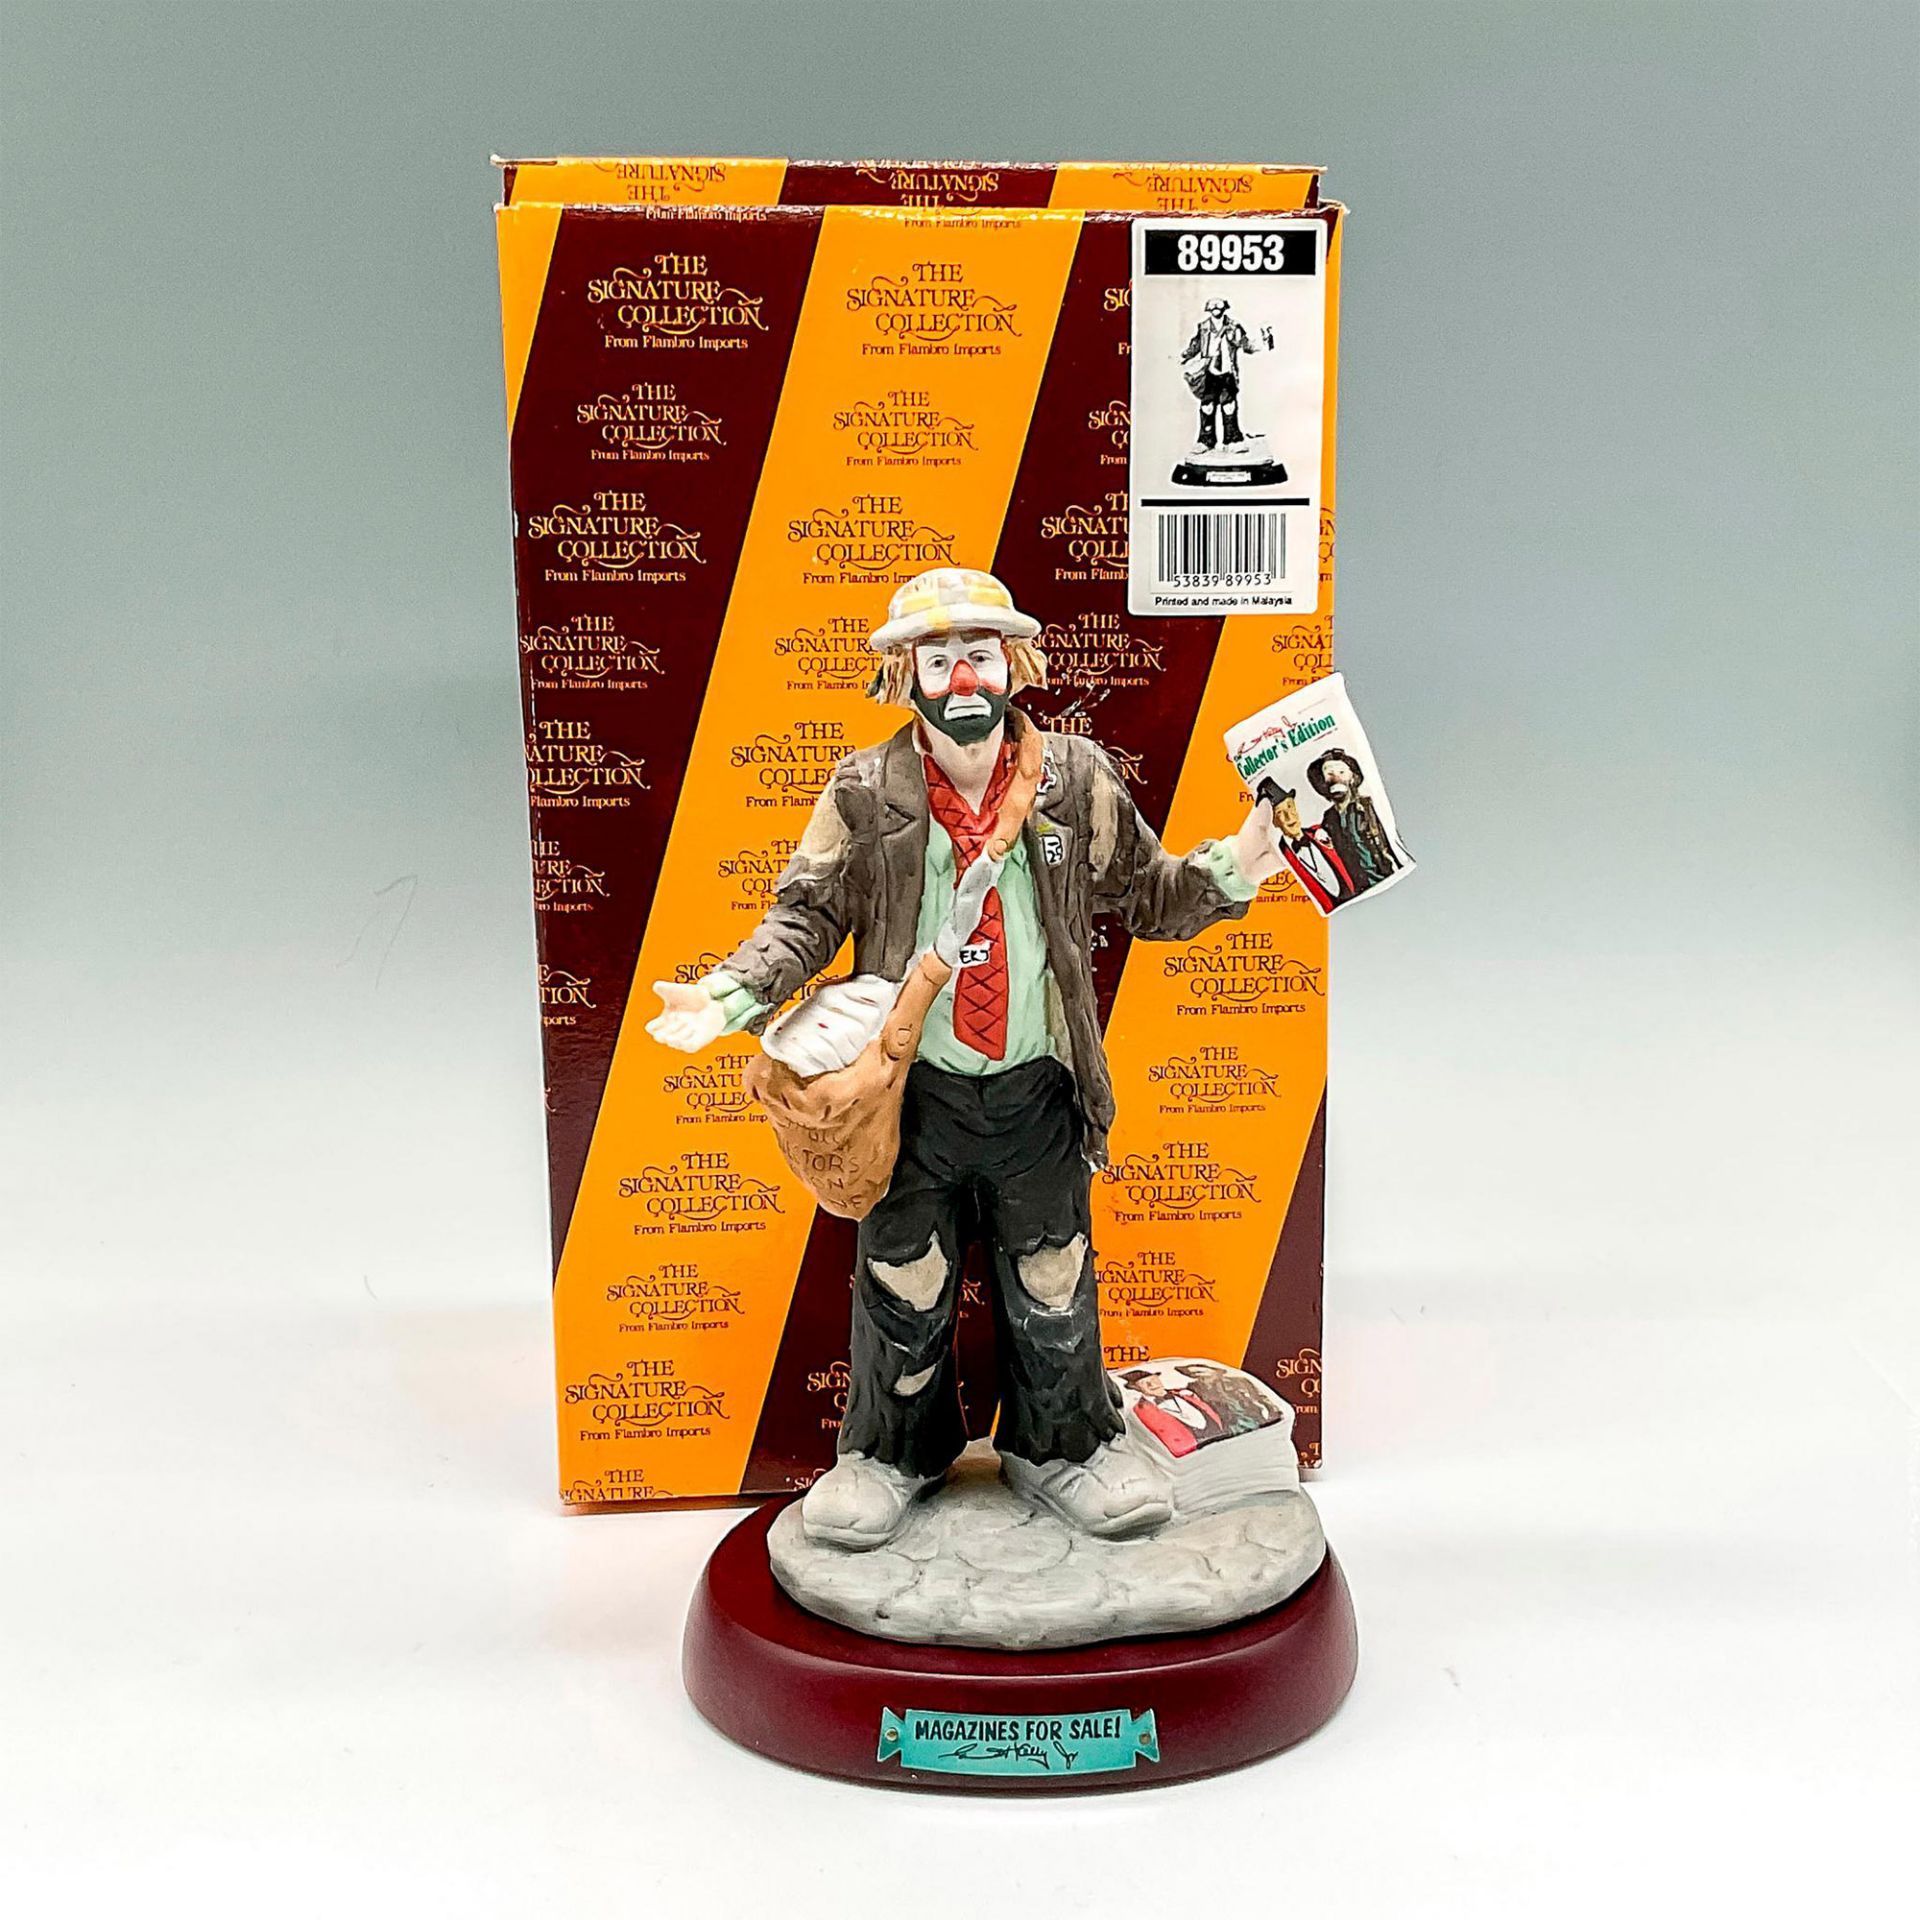 Flambro Imp. Figurine, Emmett Kelly, Jr. Magazines for Sale - Image 4 of 4